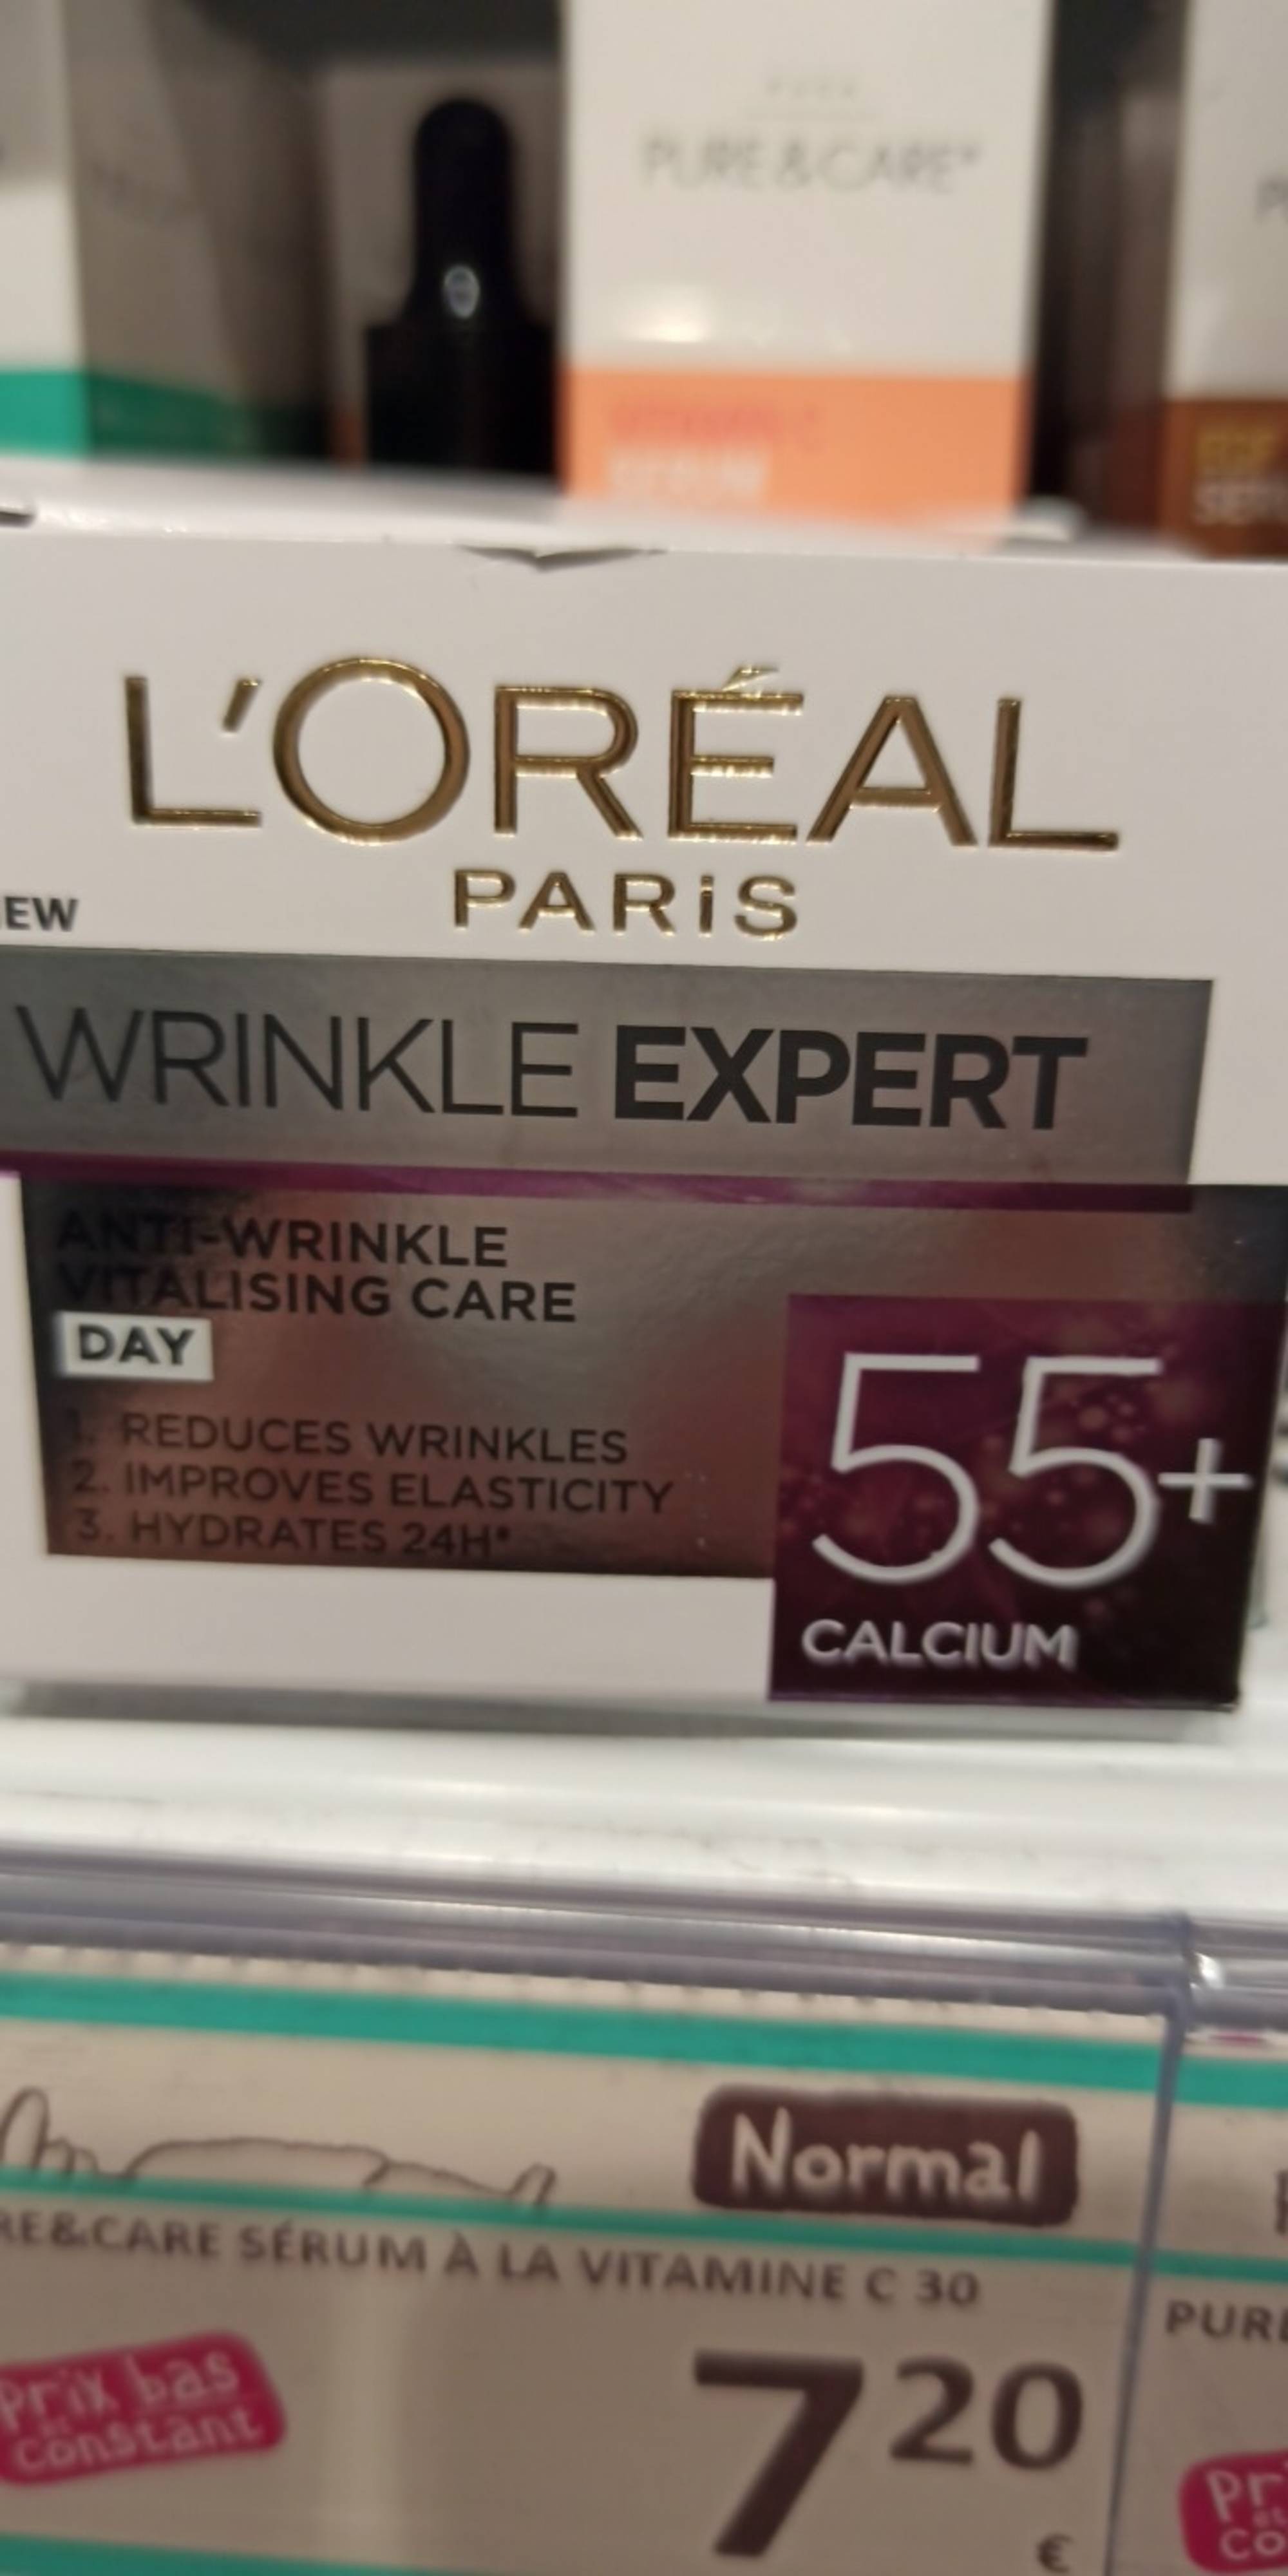 L'ORÉAL PARIS - Wrinkle expert - Anti-wrinkle - Day - 55+ calcium